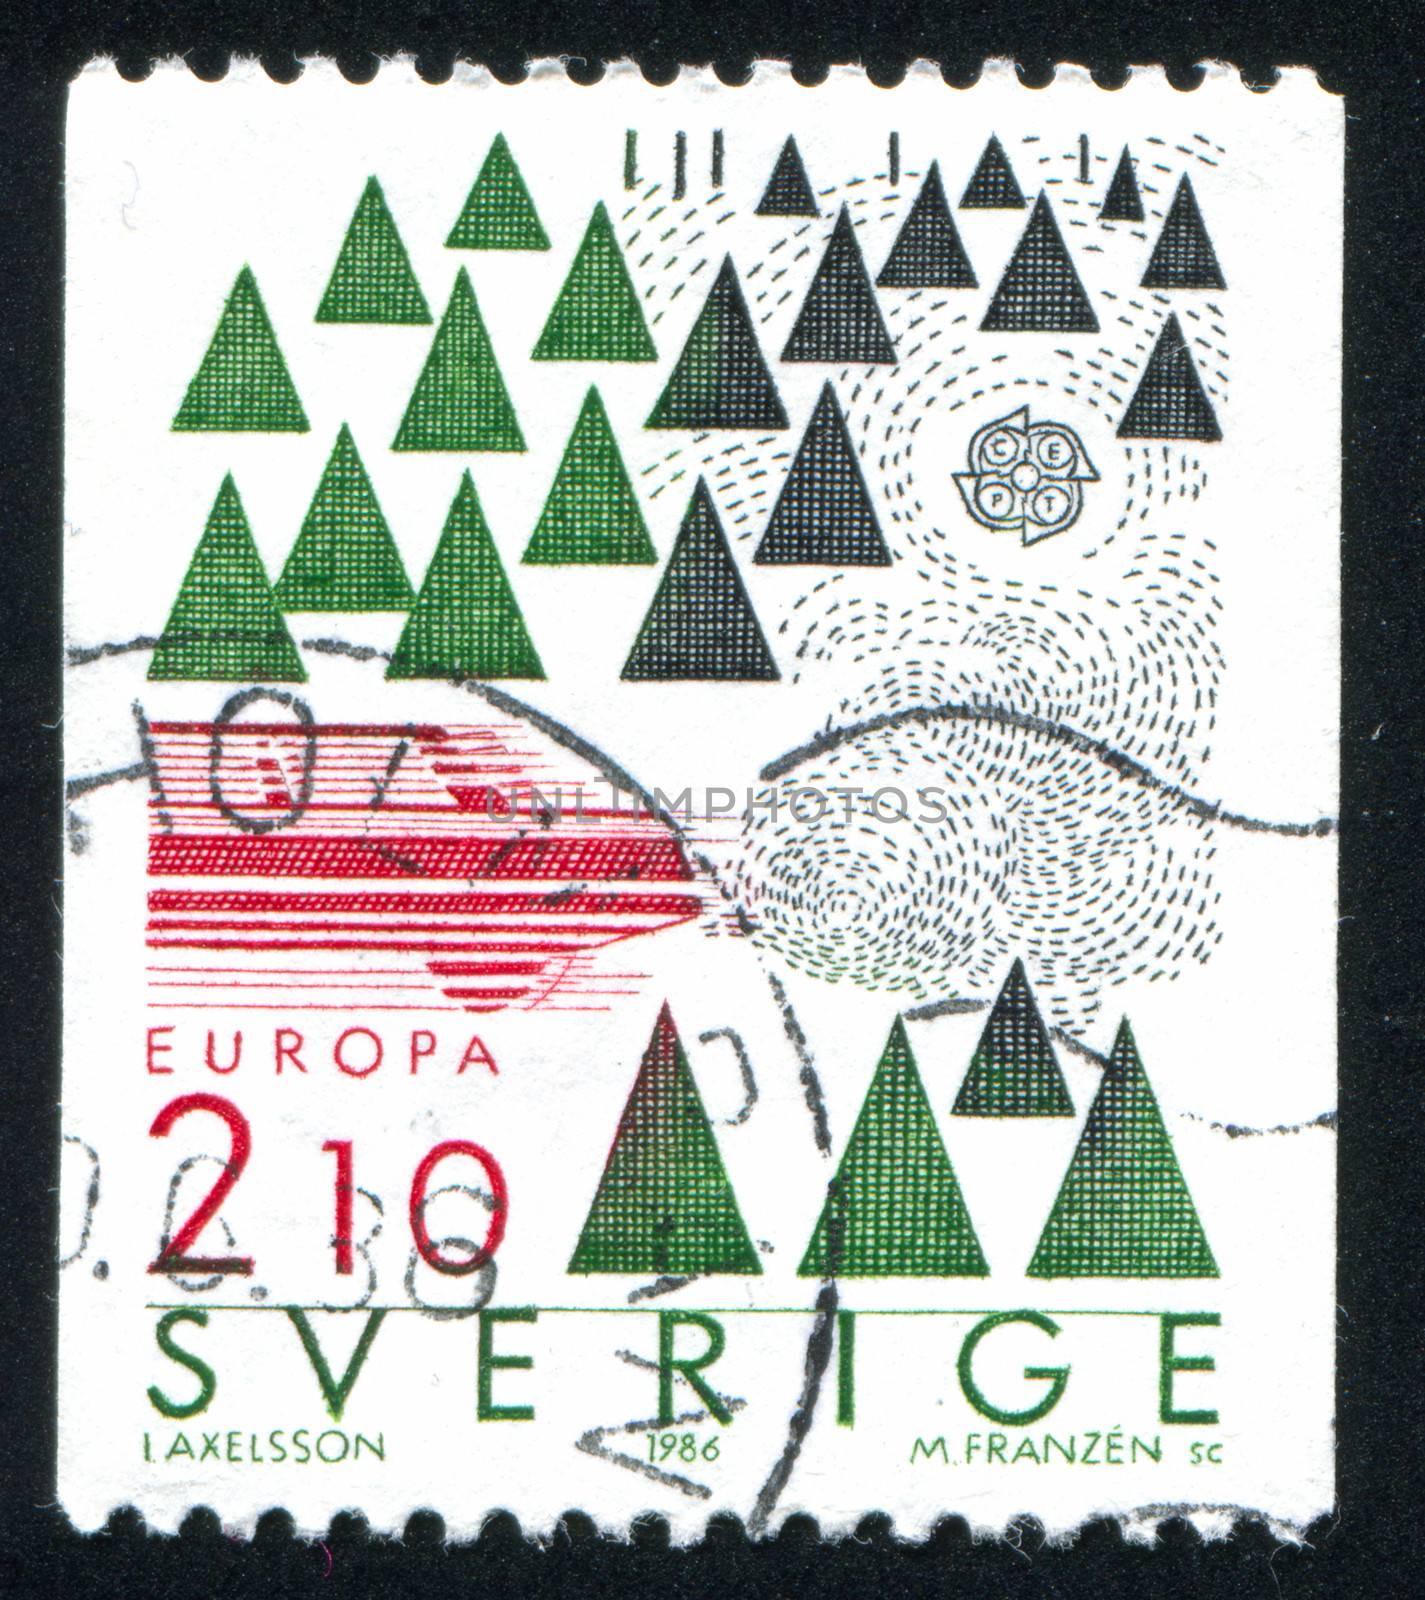 SWEDEN - CIRCA 1986: stamp printed by Sweden, shows Automotive pollutants, circa 1986